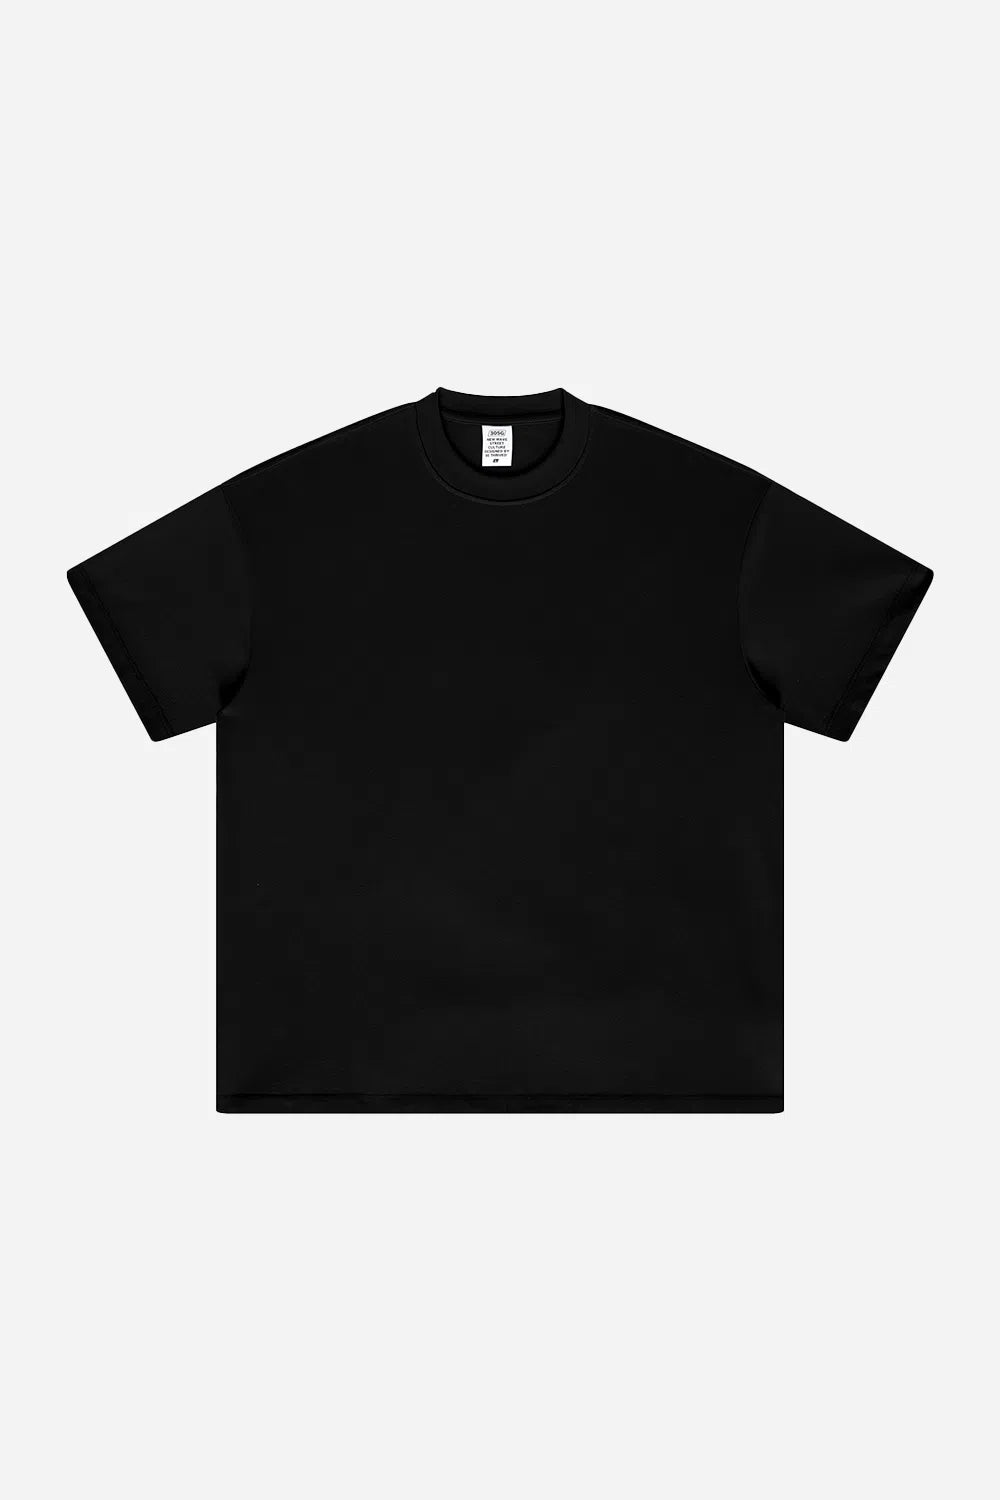 T-Shirt Blank Heavy 100% Cotton - BLACK-LOTABY